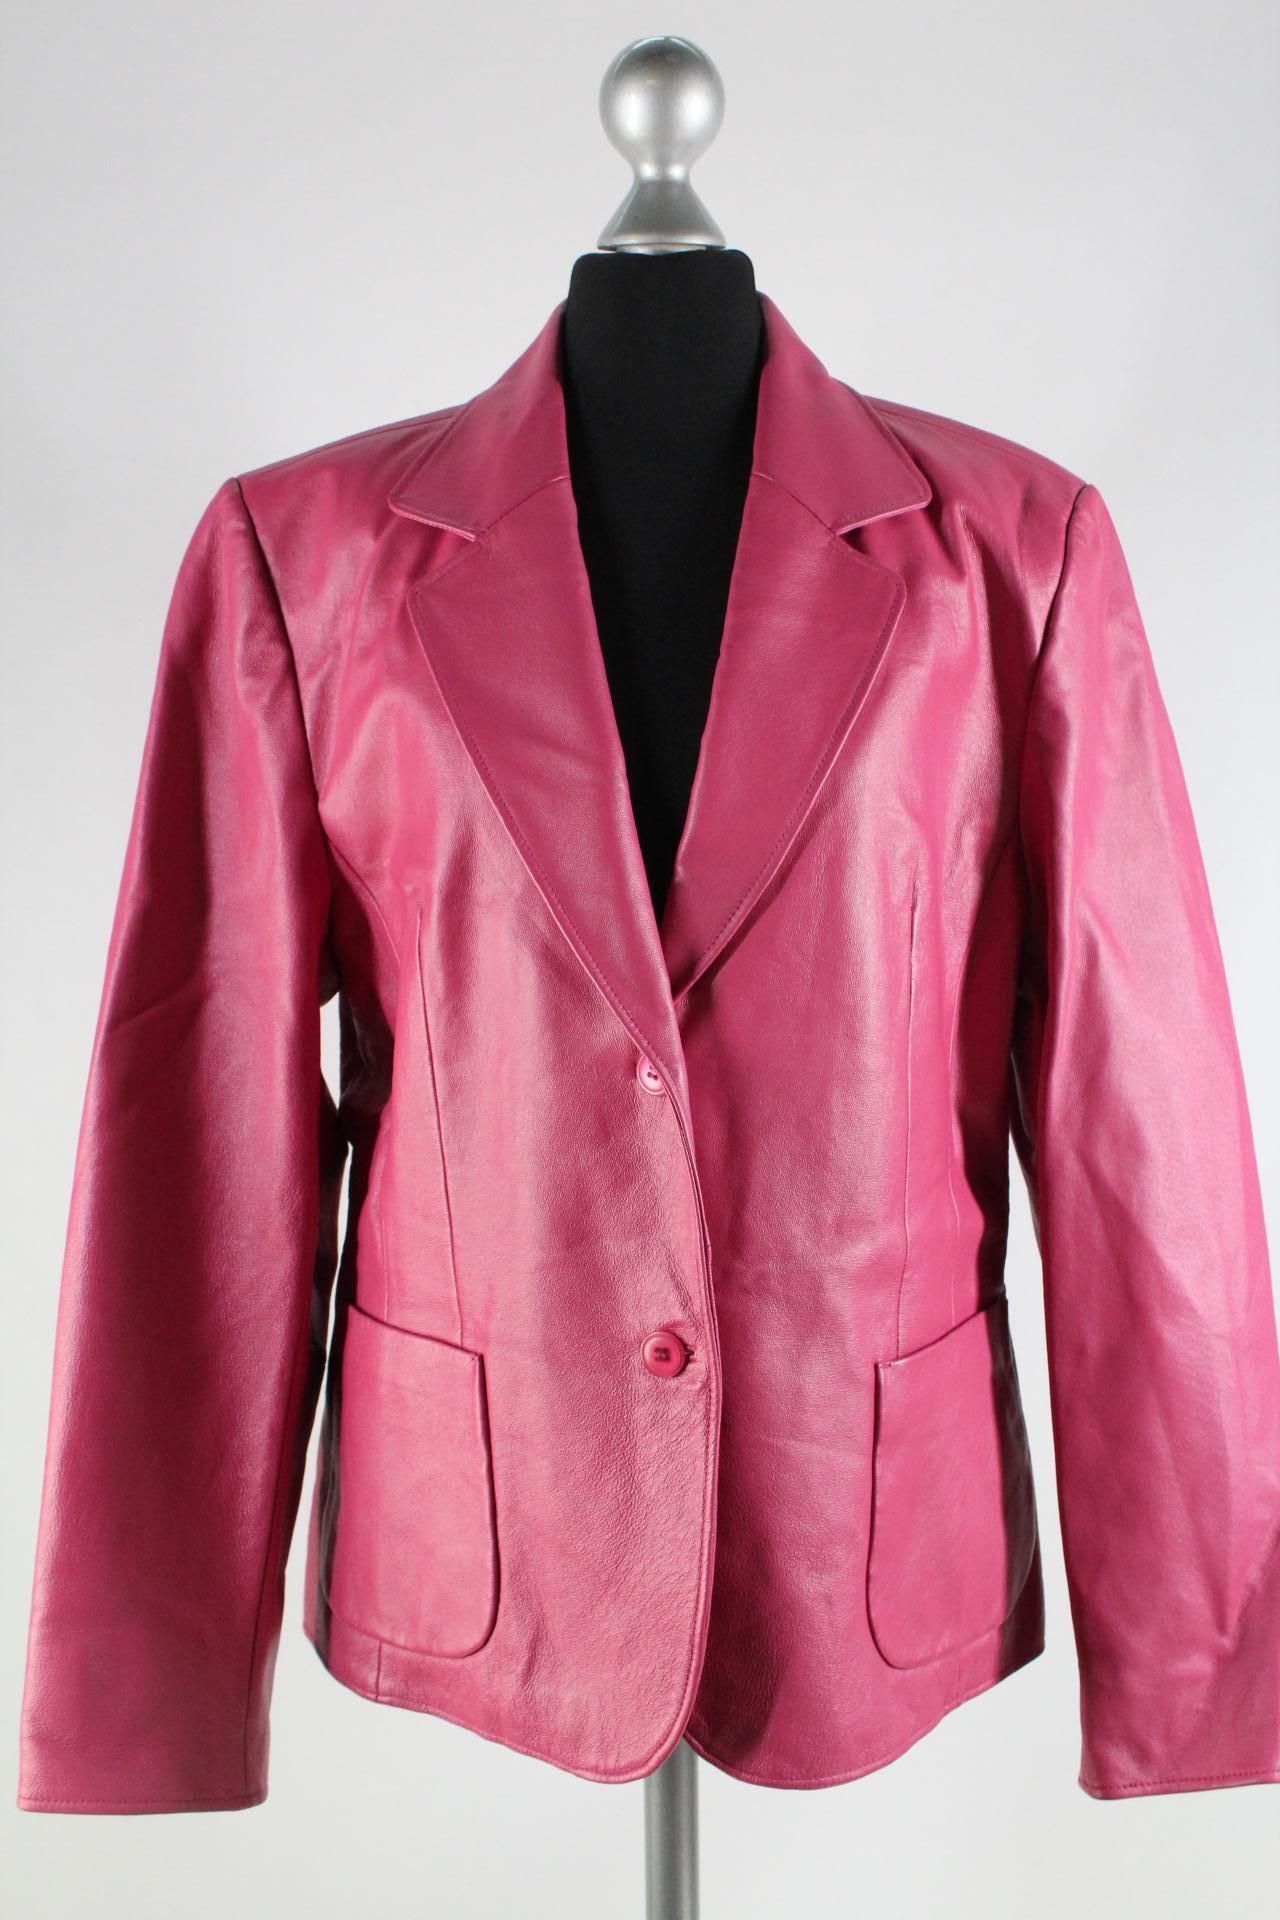 Authentic Damen-Lederjacke pink Größe 44